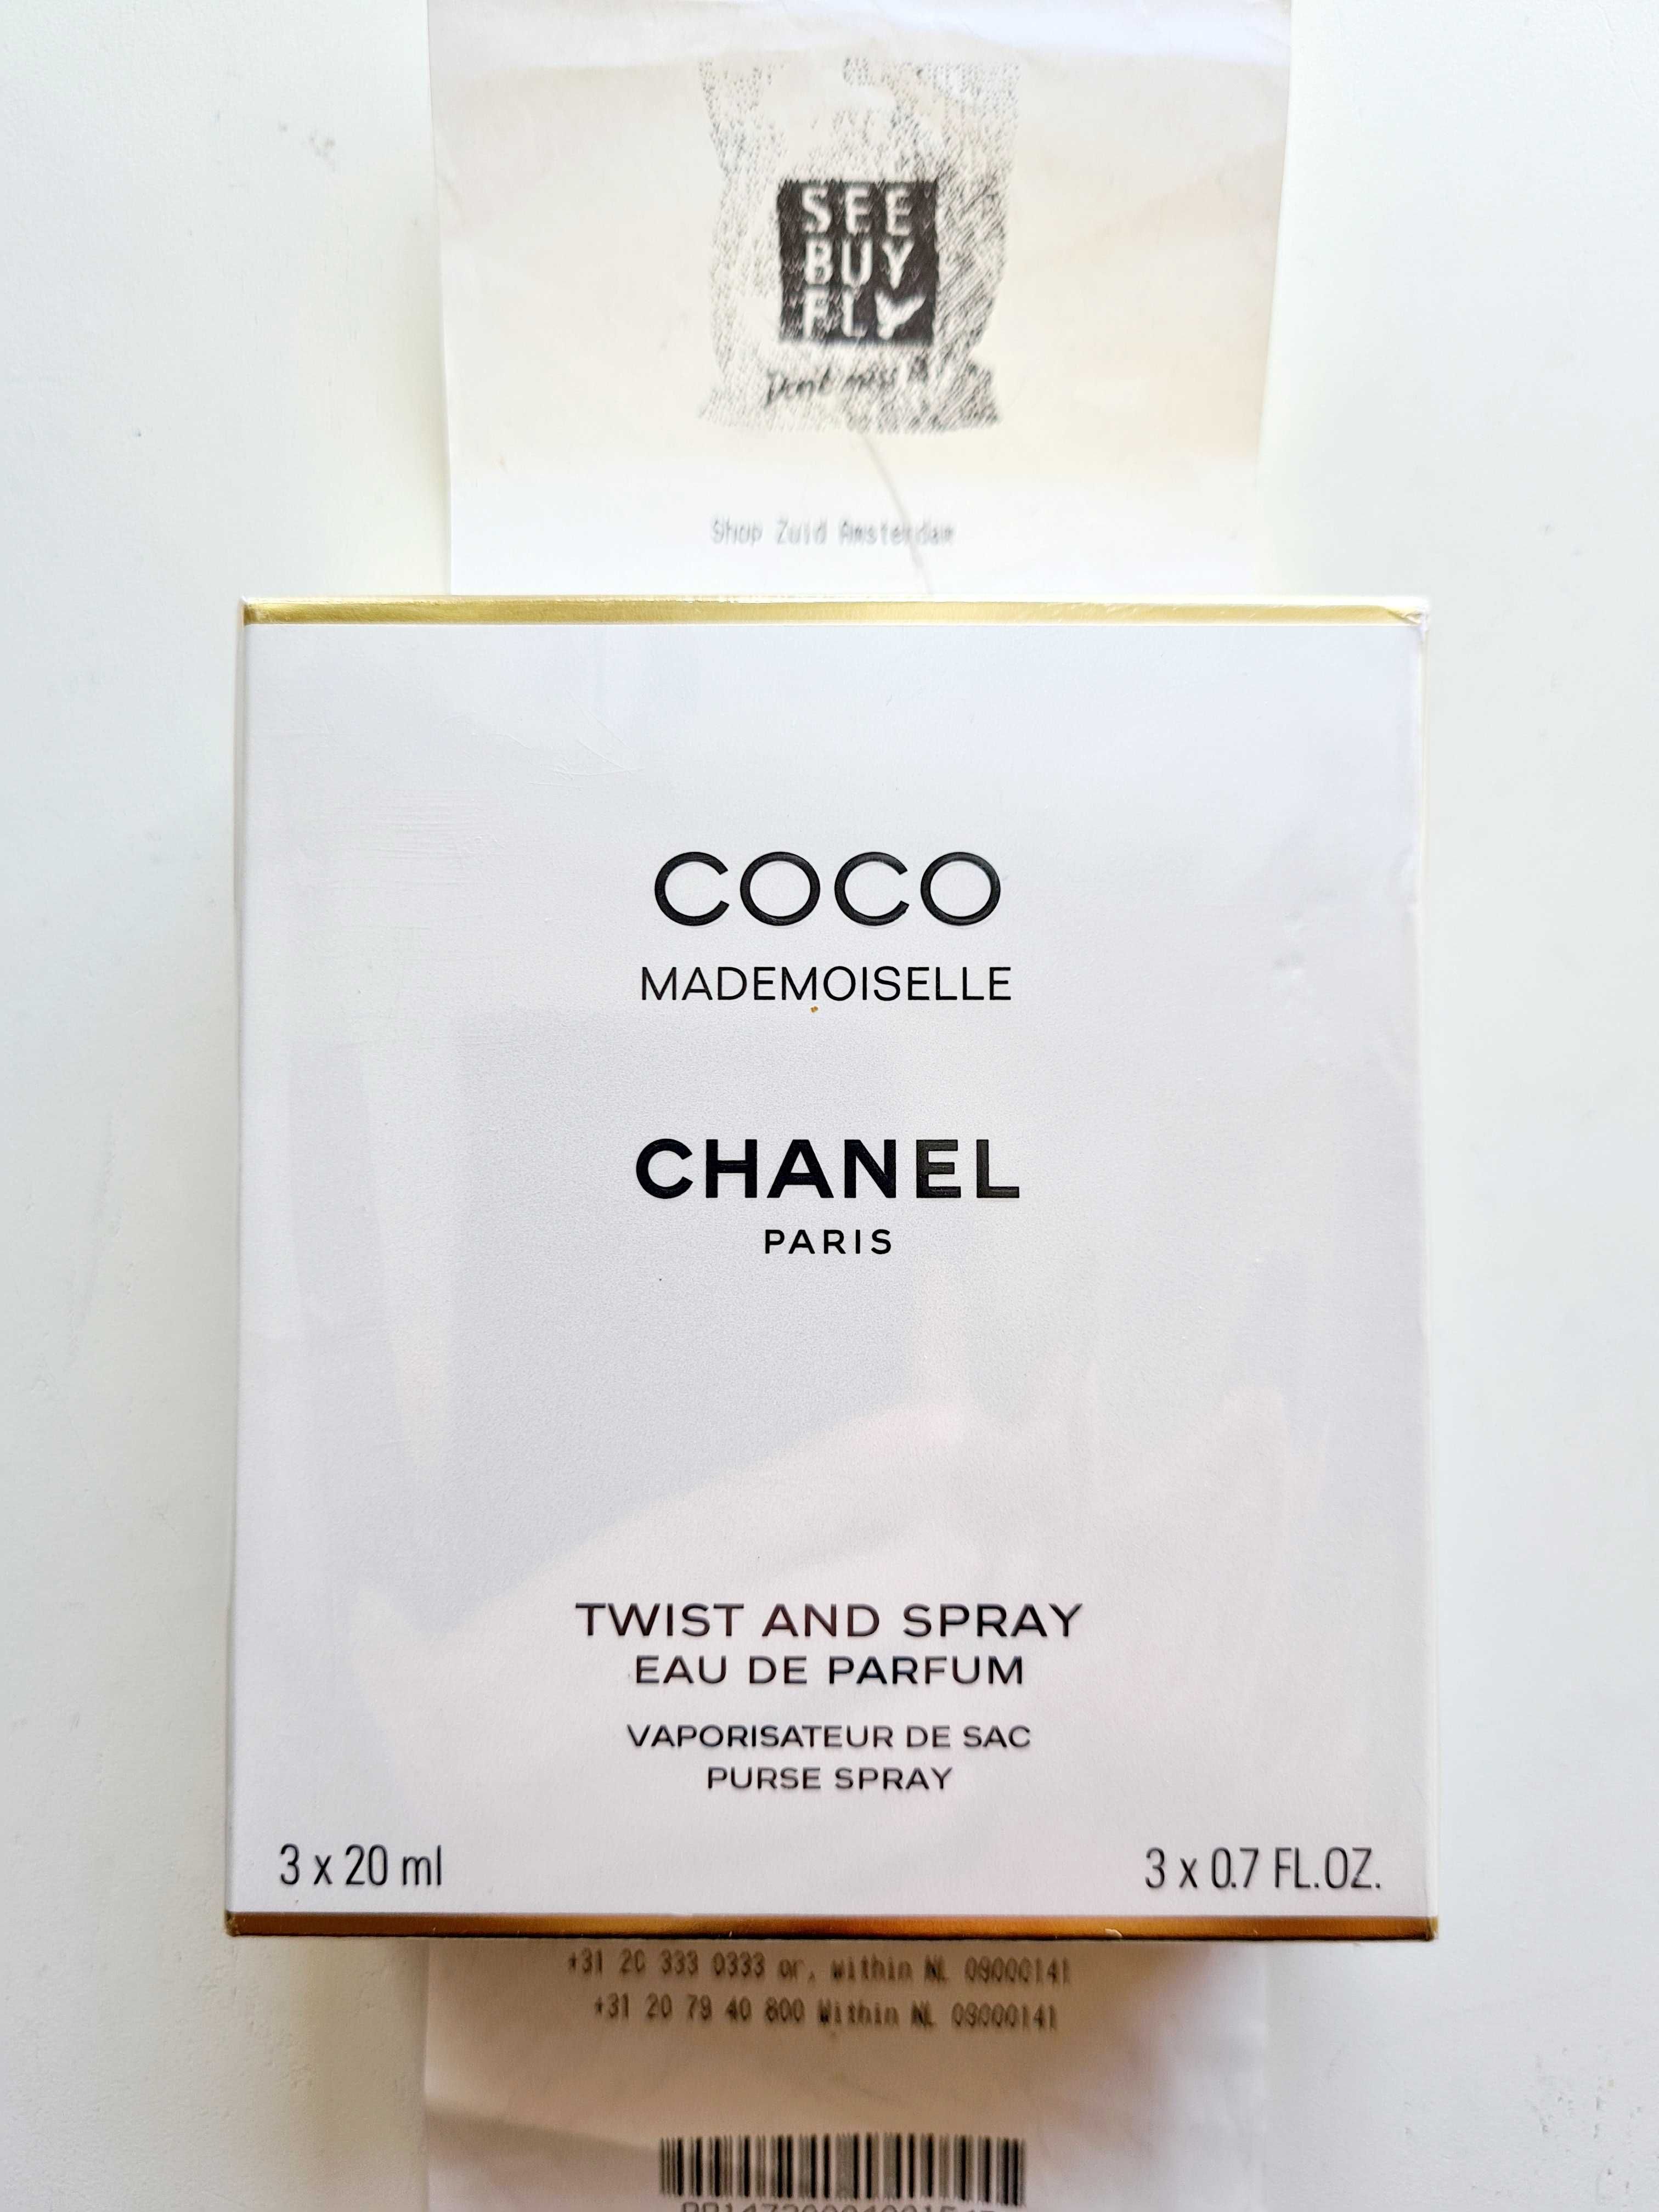 Chanel Coco Mademoiselle
3x20 ml EDP TWIST AND SPRAY
z etui, ORYGINAŁ!